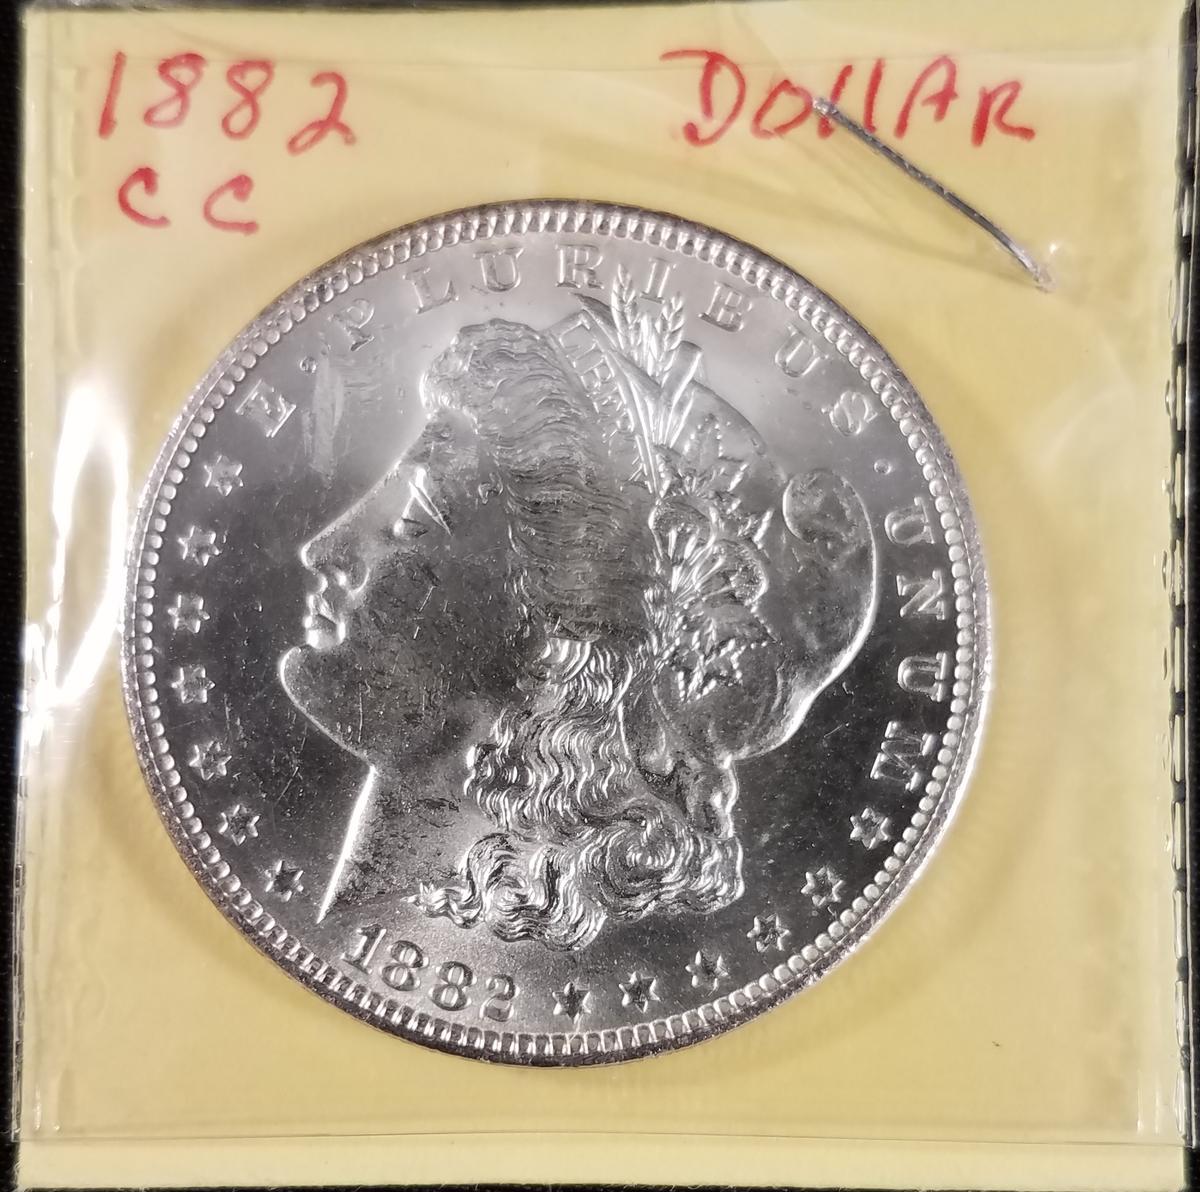 1882 CC Morgan Dollar